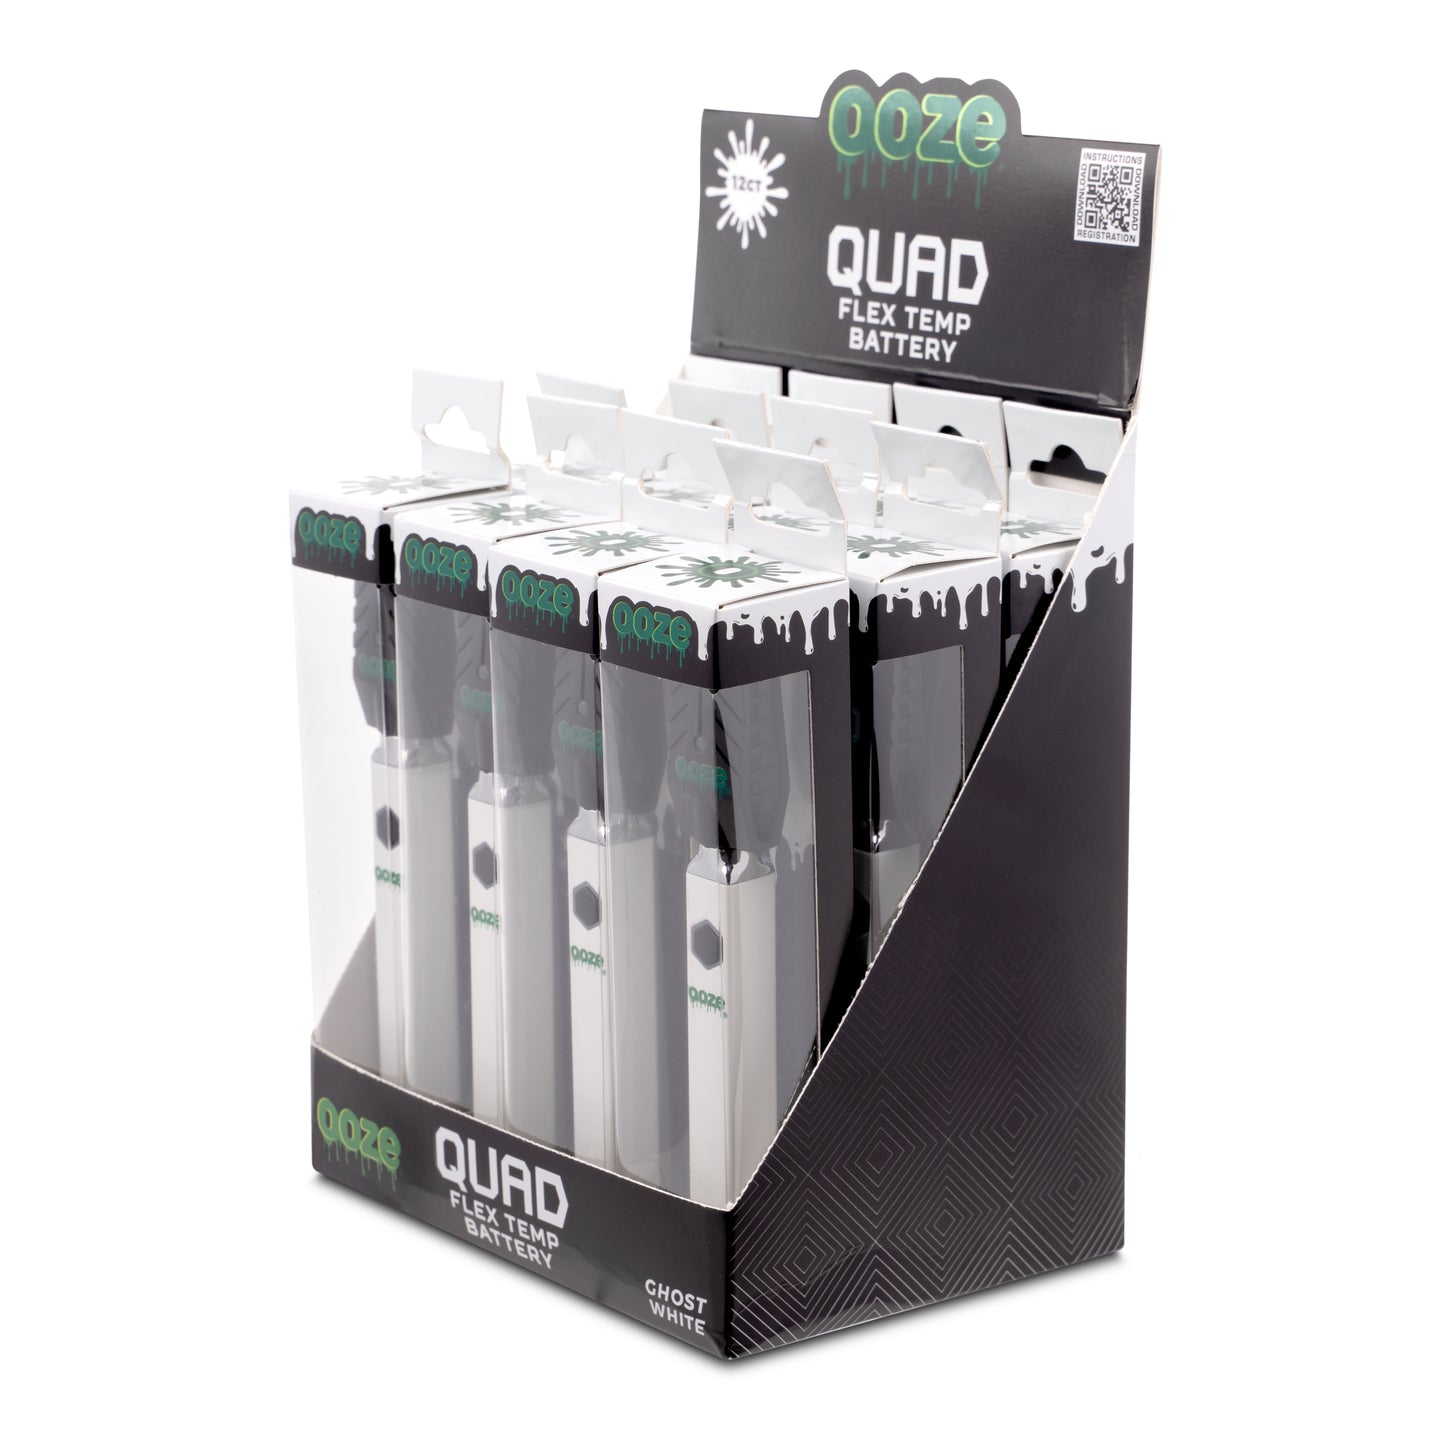 Quad - 500 mAh Square Flex Temp Battery - Ghost White